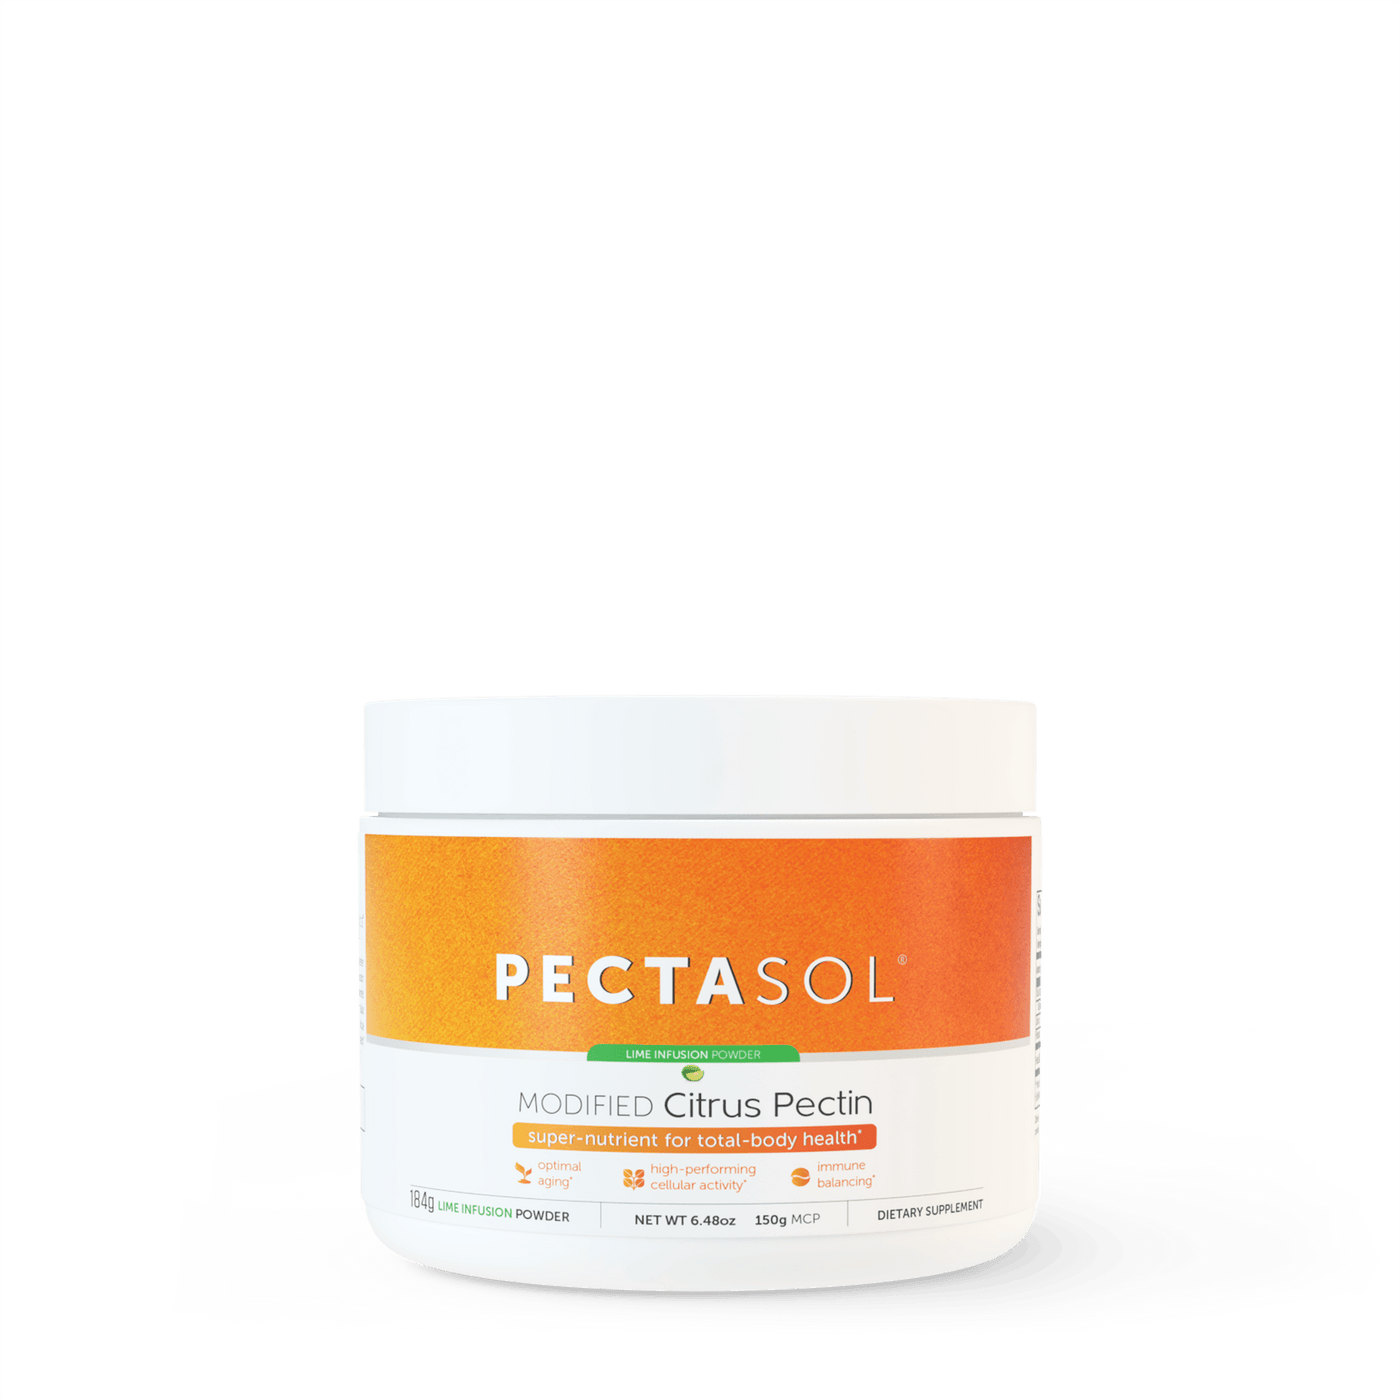 PectaSol Powder - ecoNugenics